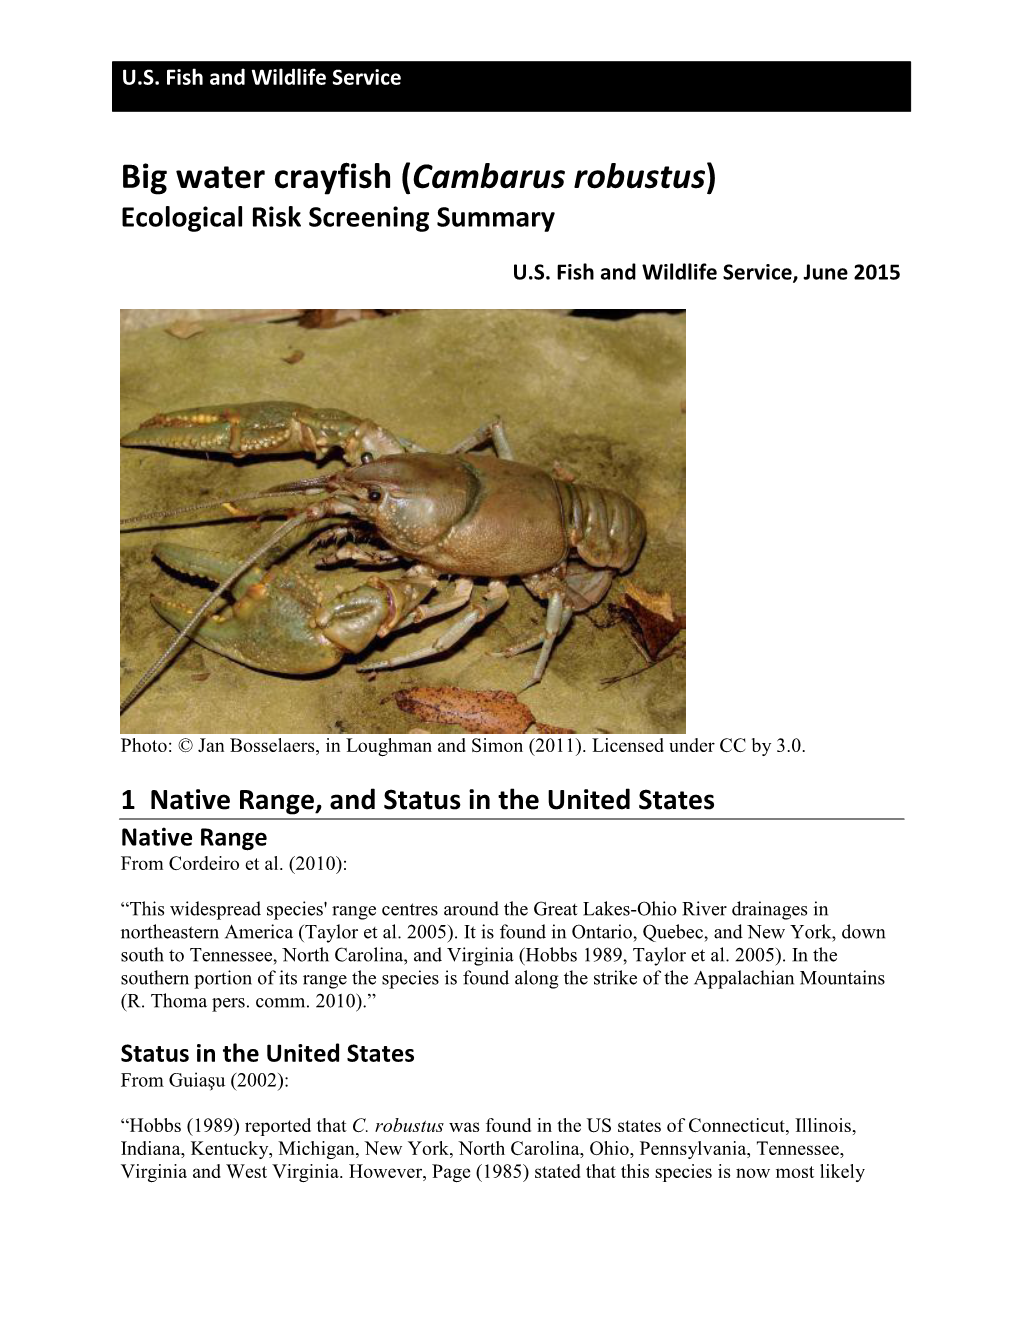 Big Water Crayfish (Cambarus Robustus) ERSS